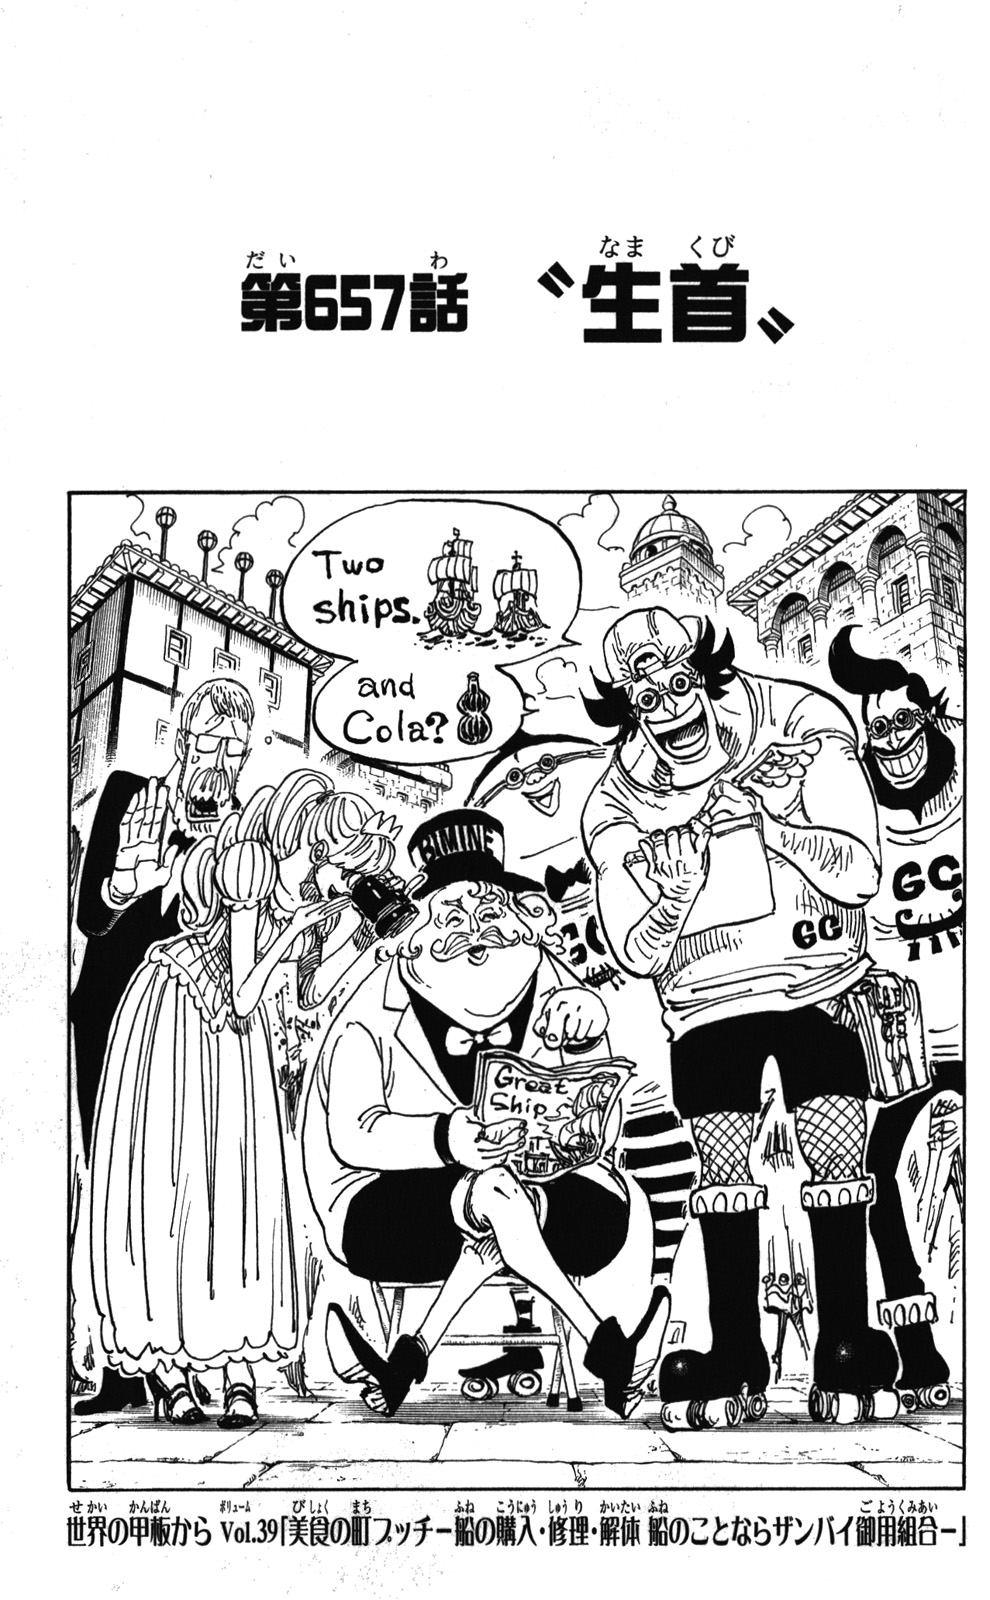 Baker 『ベイカー』 - ONE PIECE fan 🤖⚗️🌴🥚🌴🧪🤖 on X: WSJ 2022 n°38 ONE PIECE  // Eiichirō Oda chapitre 1057: Conclusion Manga Plus: 21/8 WSJ: 22/8 -----  chapitre 1058: Manga Plus : 28/8 WSJ : 29/8 #onepiece1057   / X